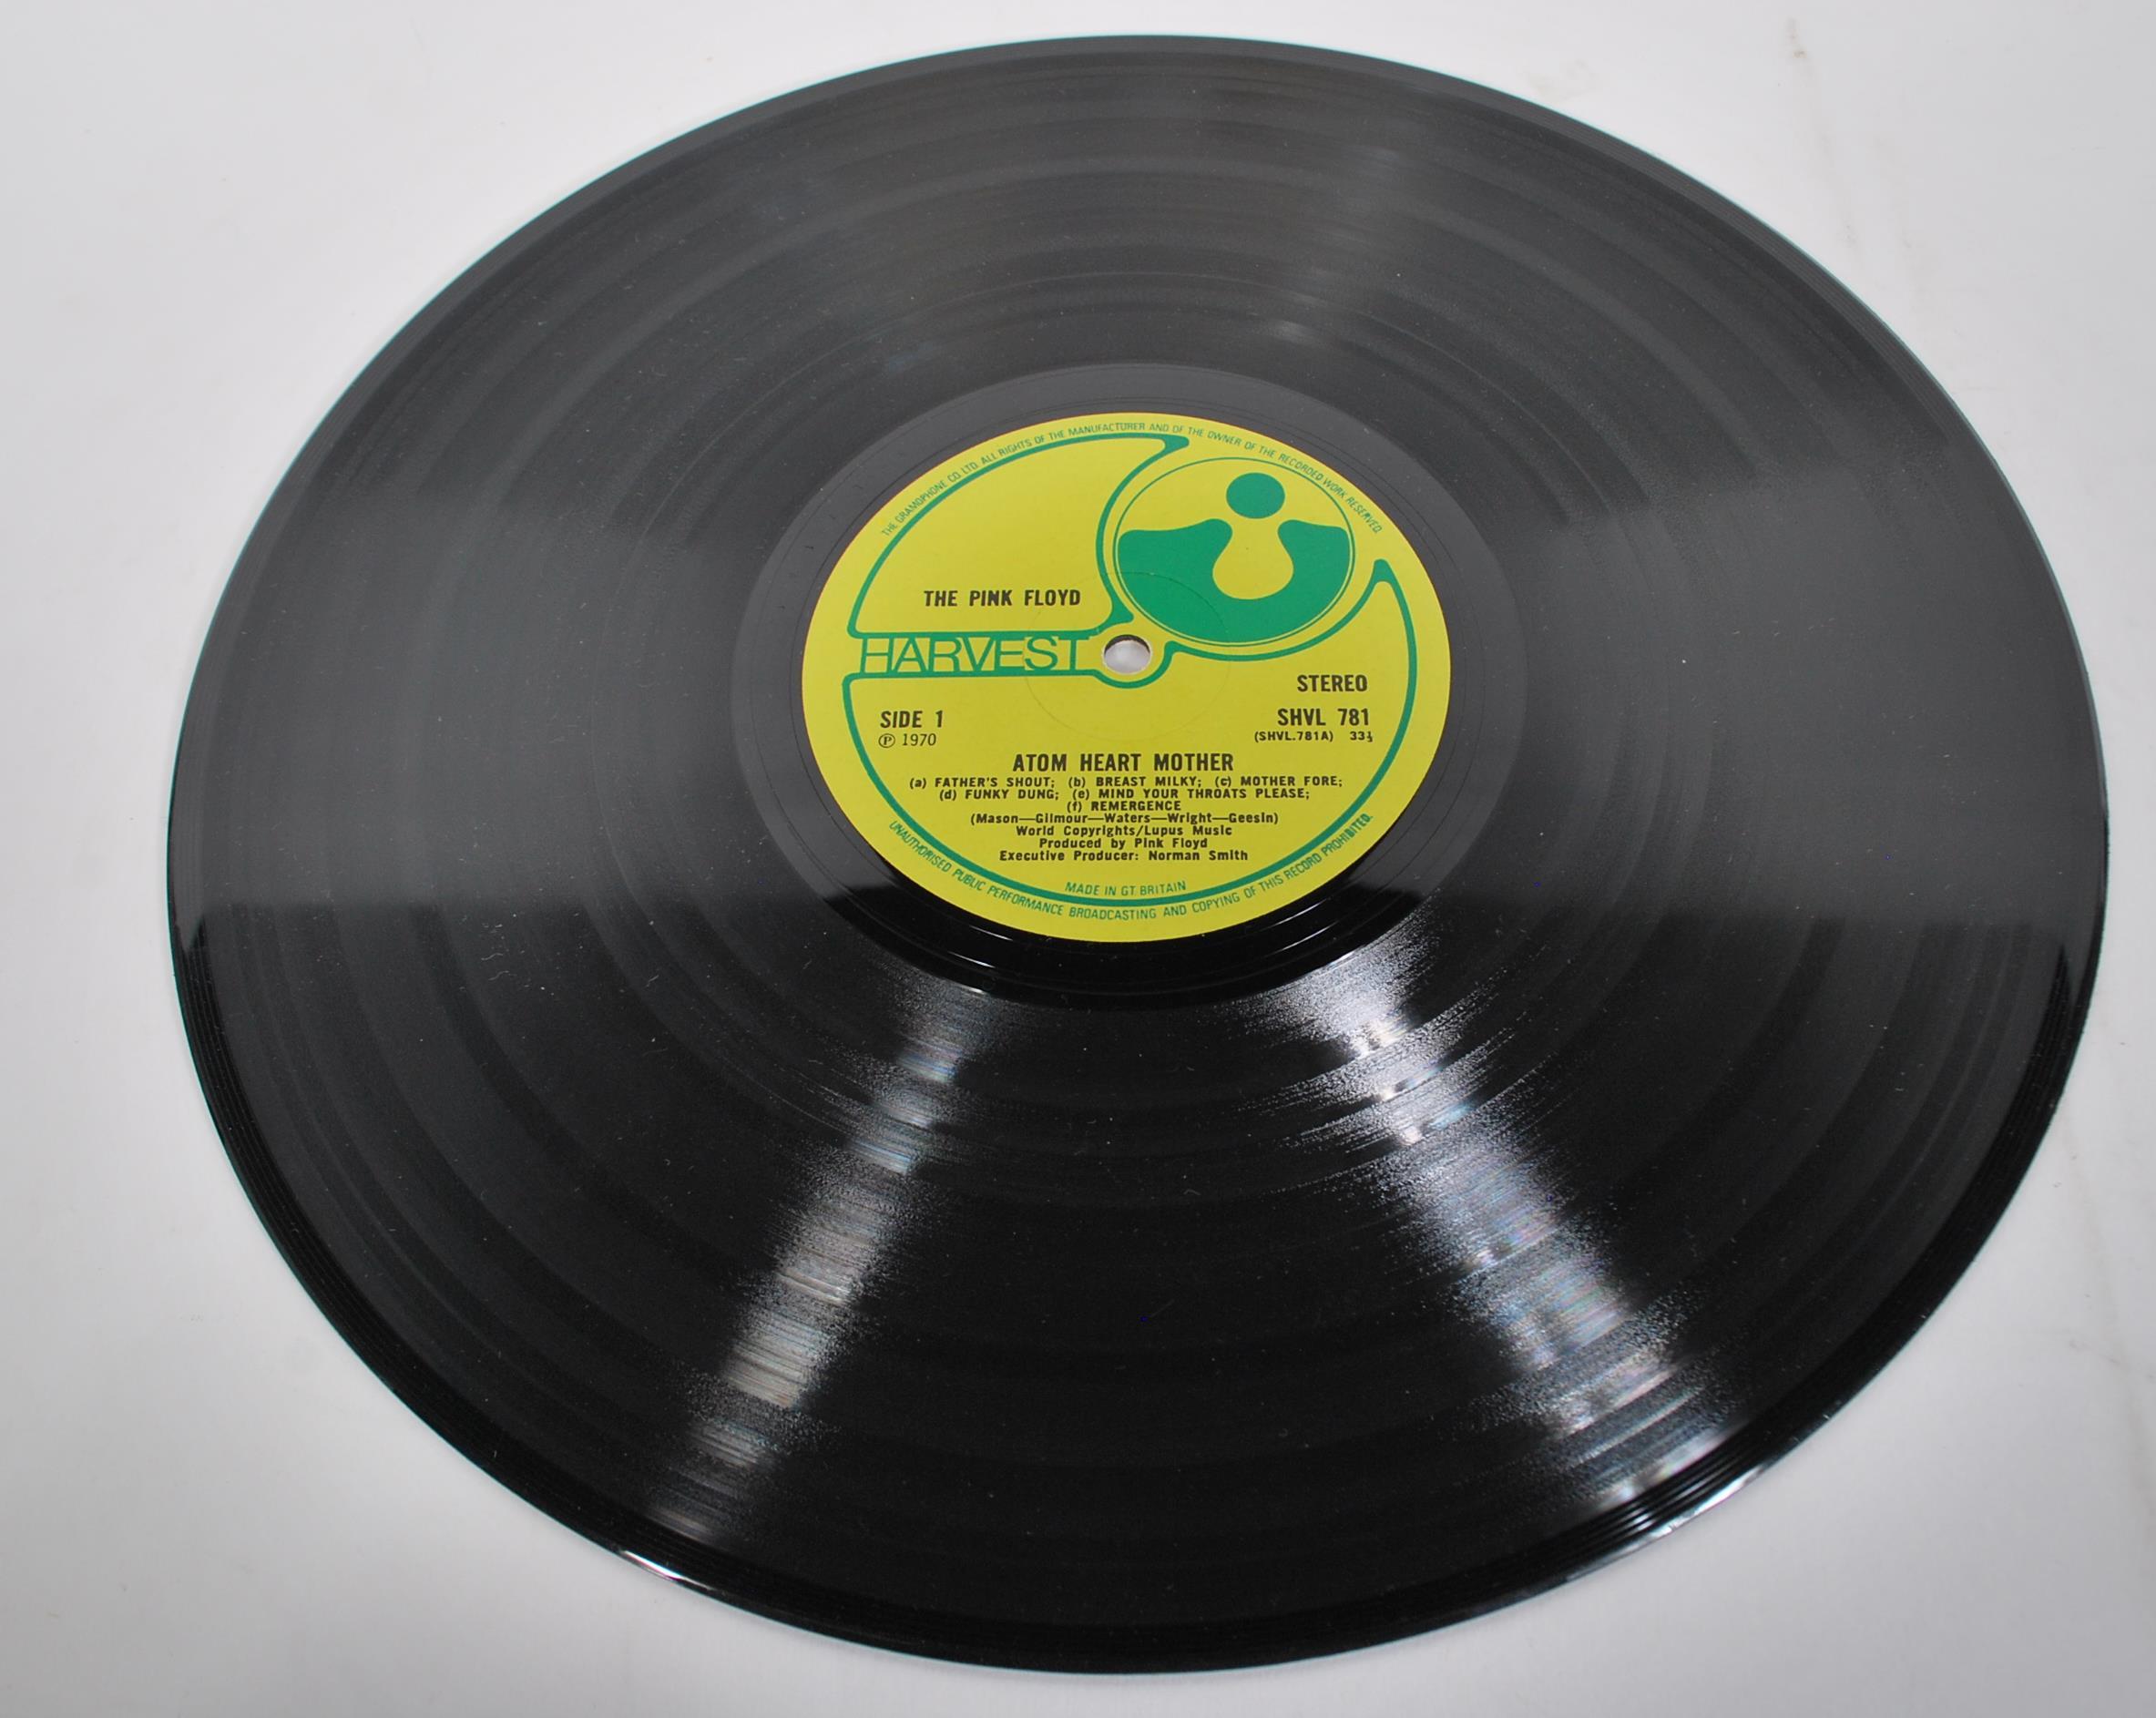 Vinyl long play LP record album by Pink Floyd – Atom Heart Mother – Original Harvest 1st U.K. - Image 4 of 5